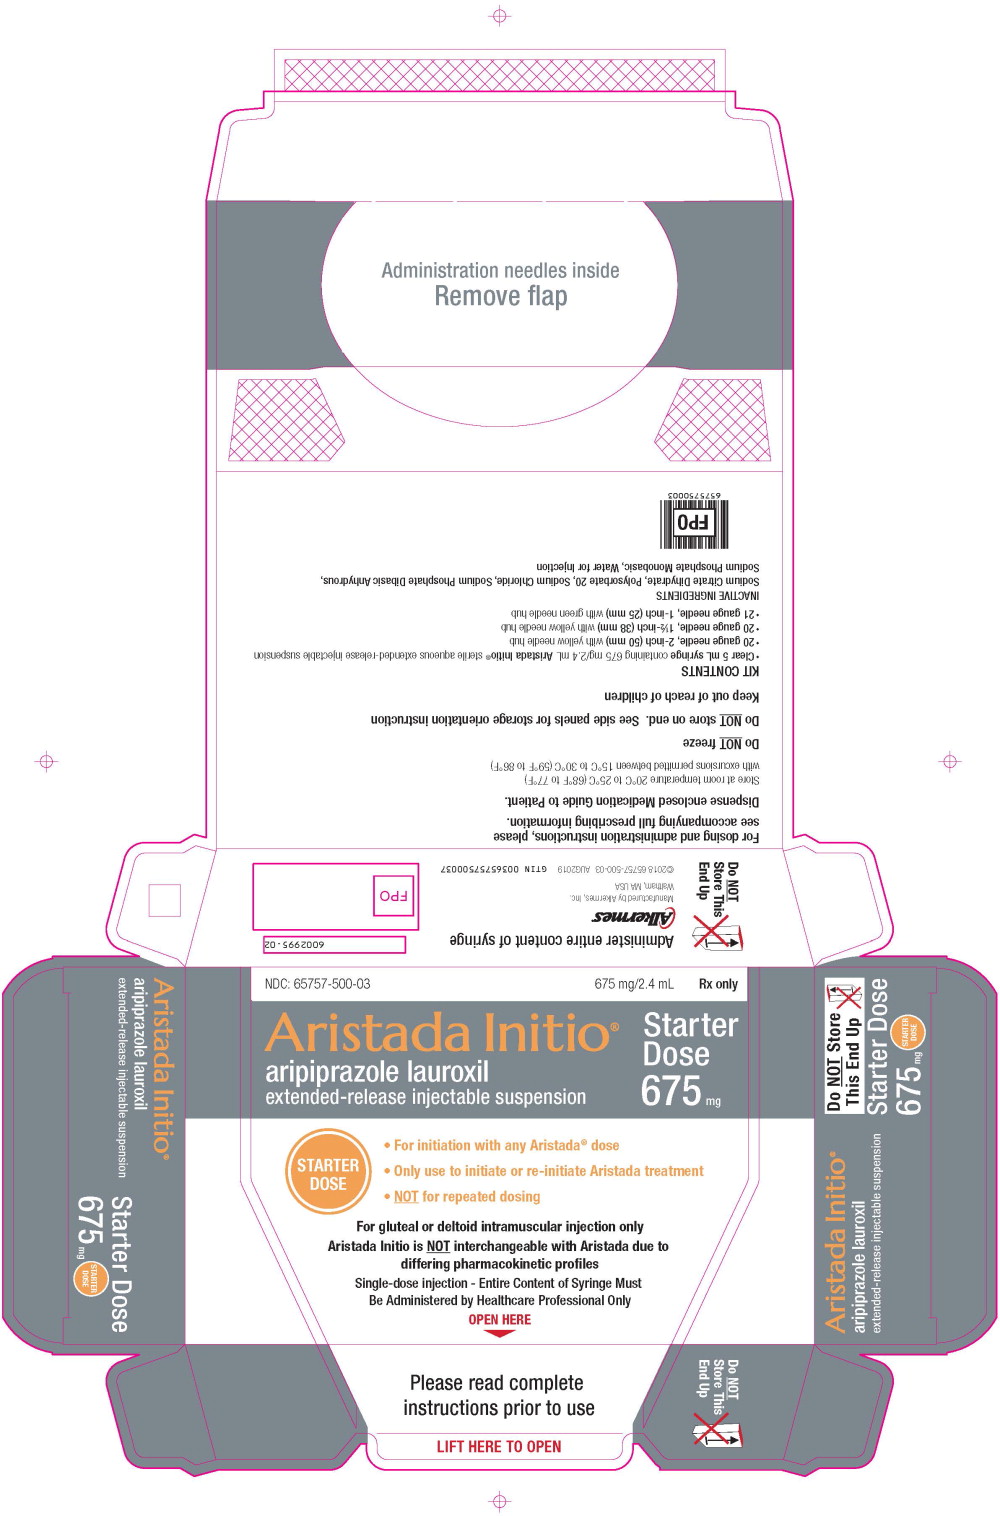 Principal Display Panel - Aristada Initio Carton Label
